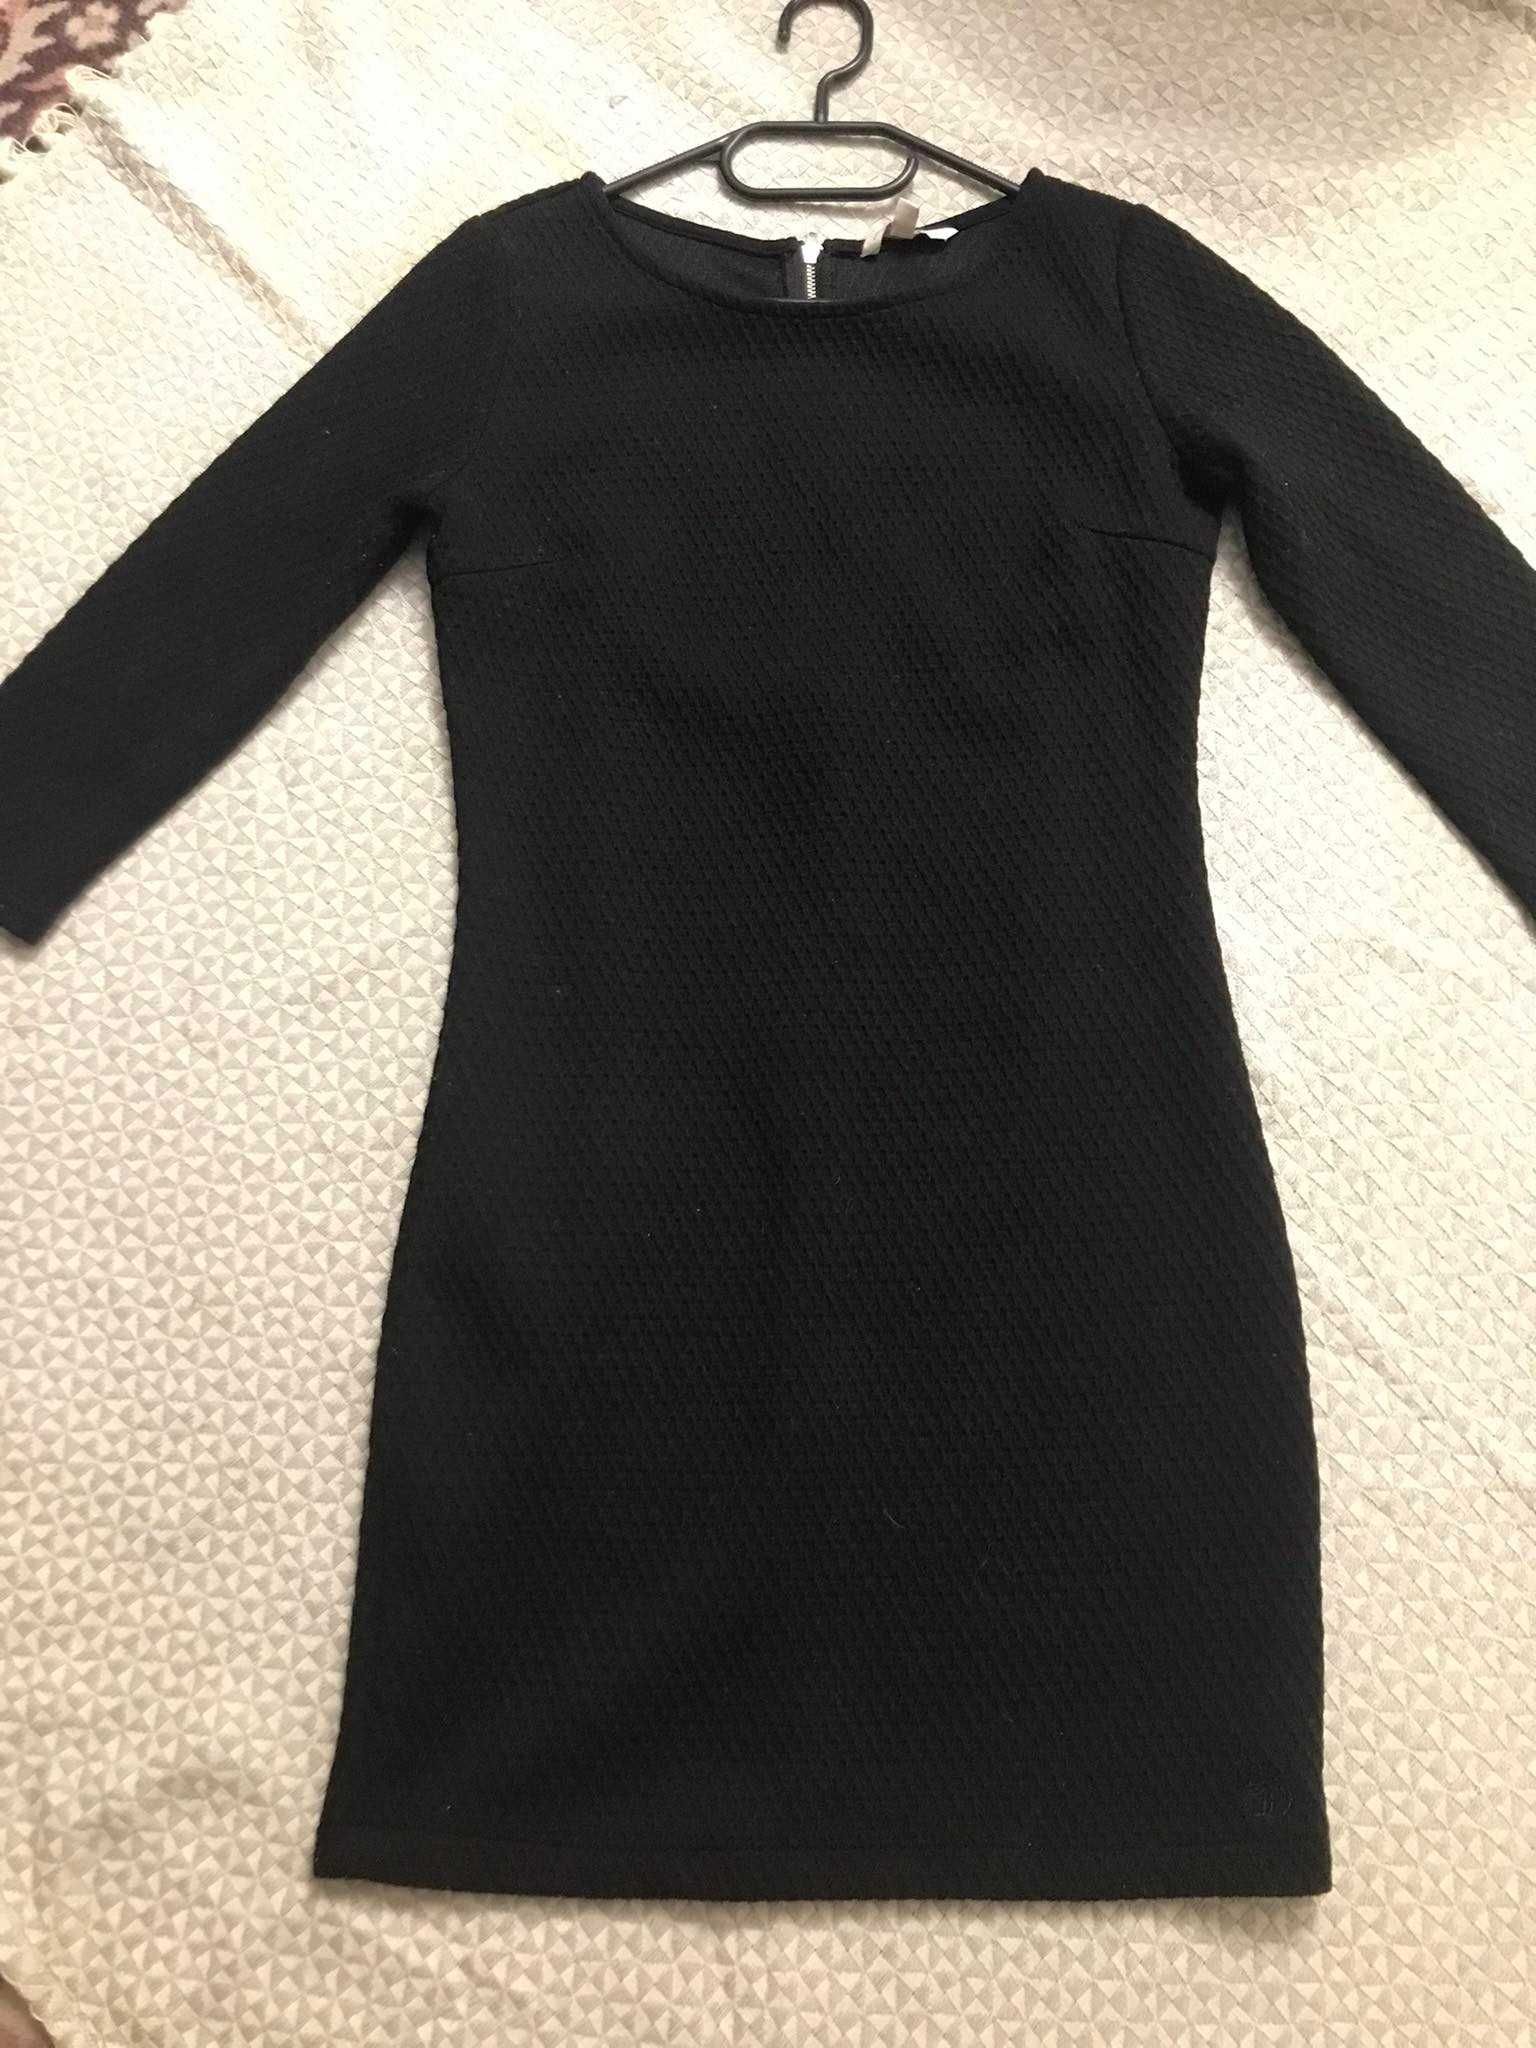 Czarna, pikowana sukienka.